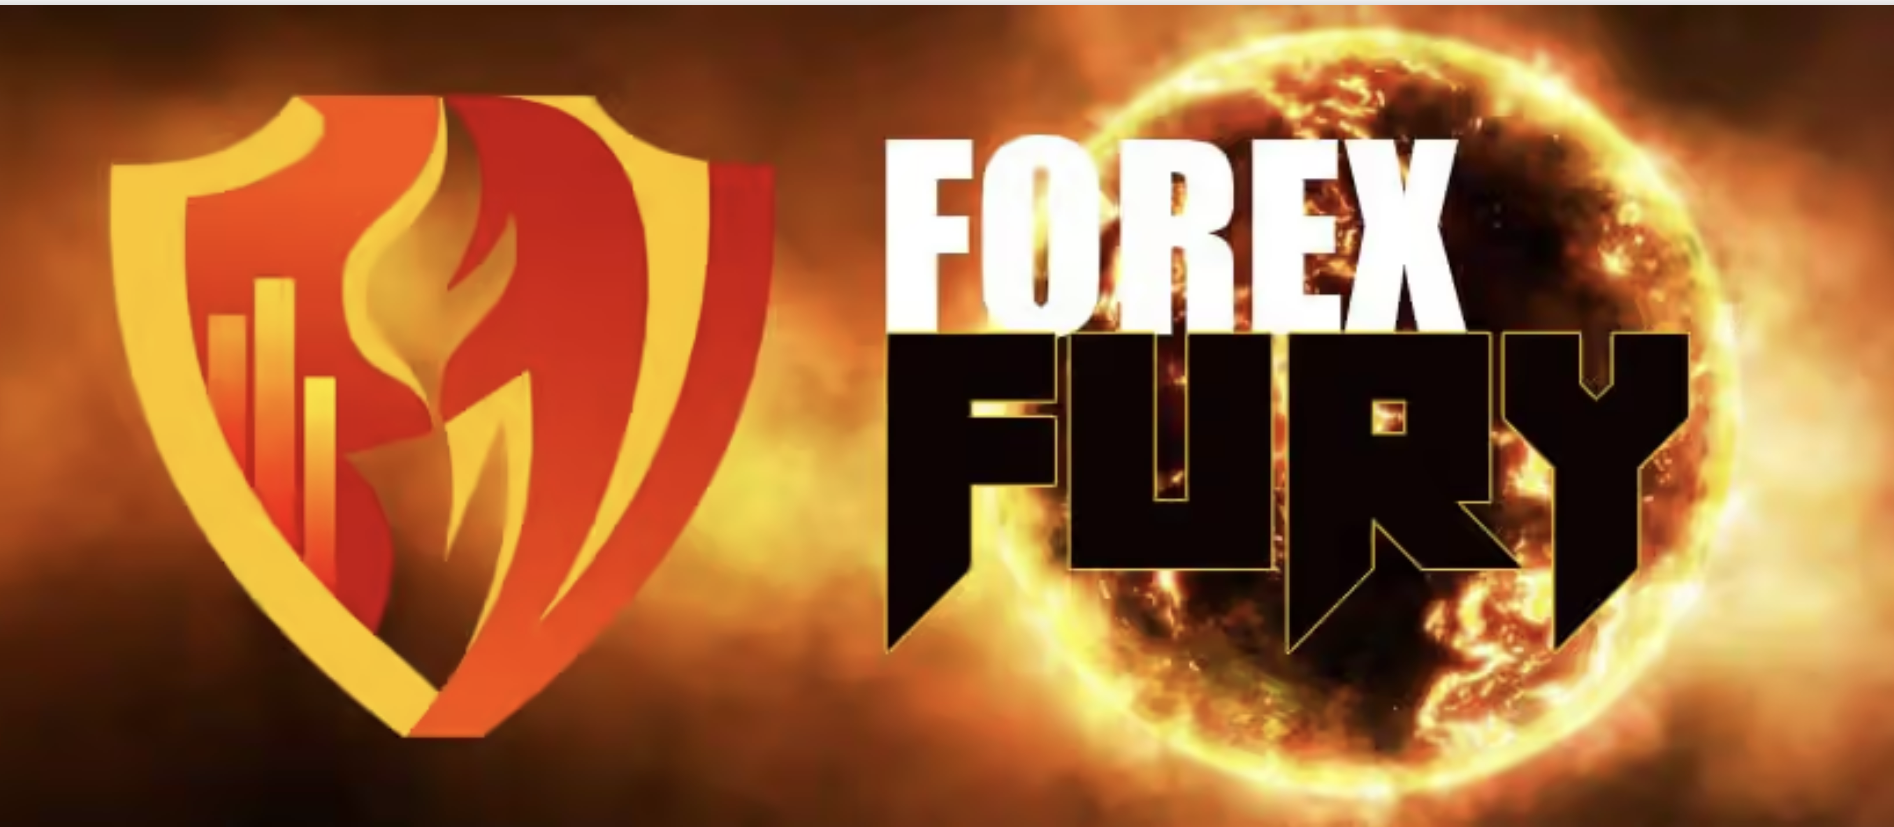 forex fury main